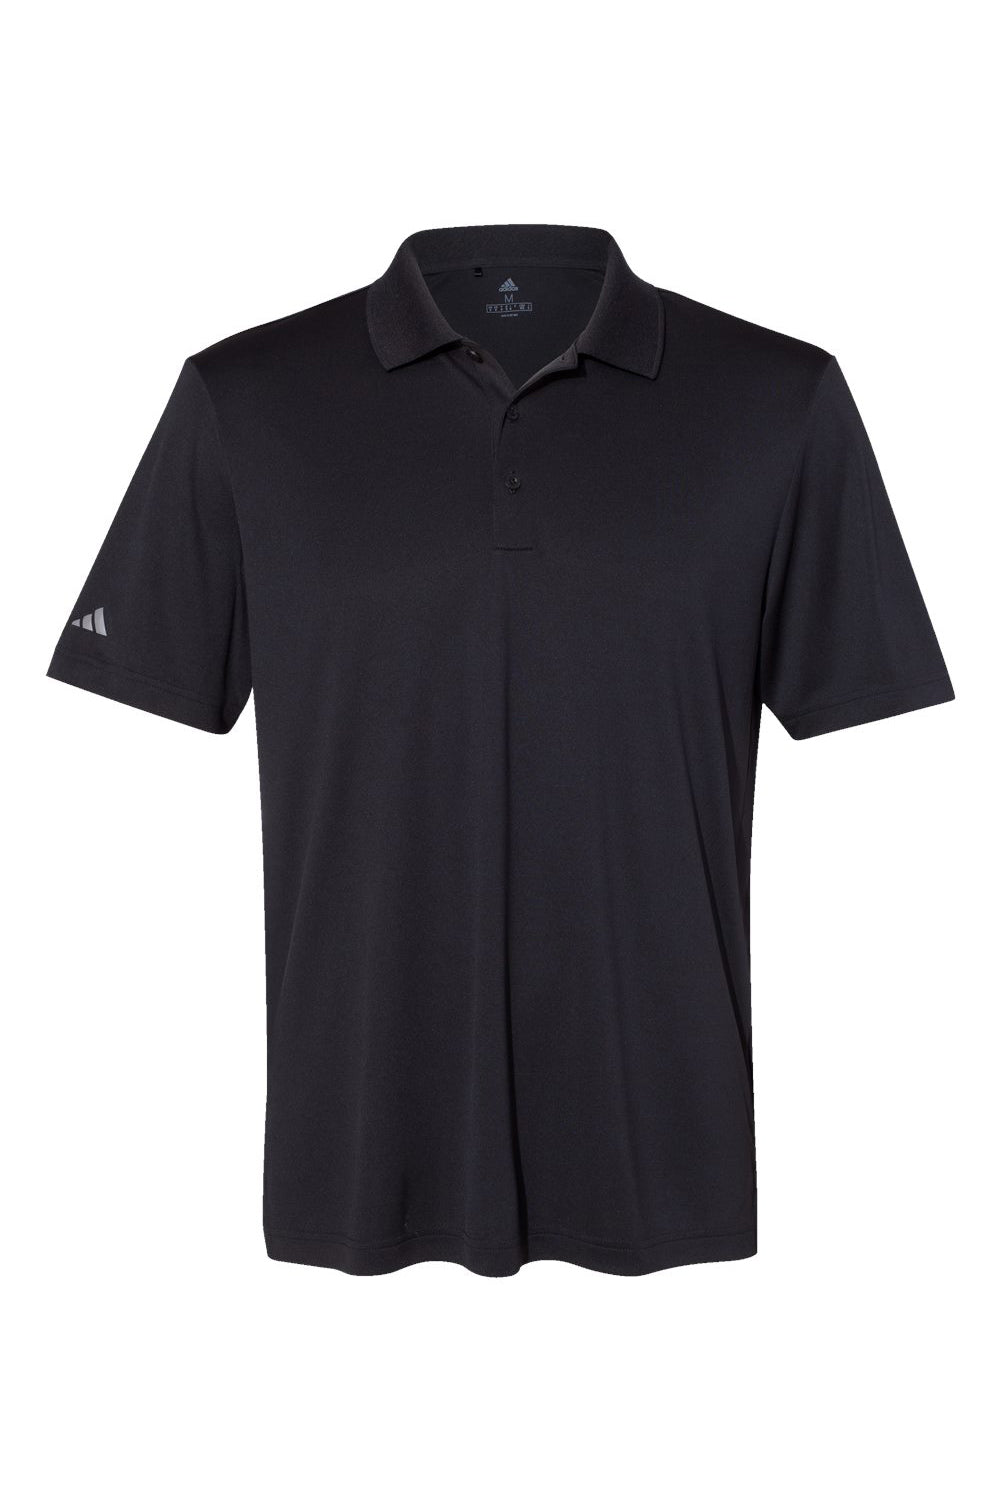 Adidas A230 Mens Performance Short Sleeve Polo Shirt Black Flat Front